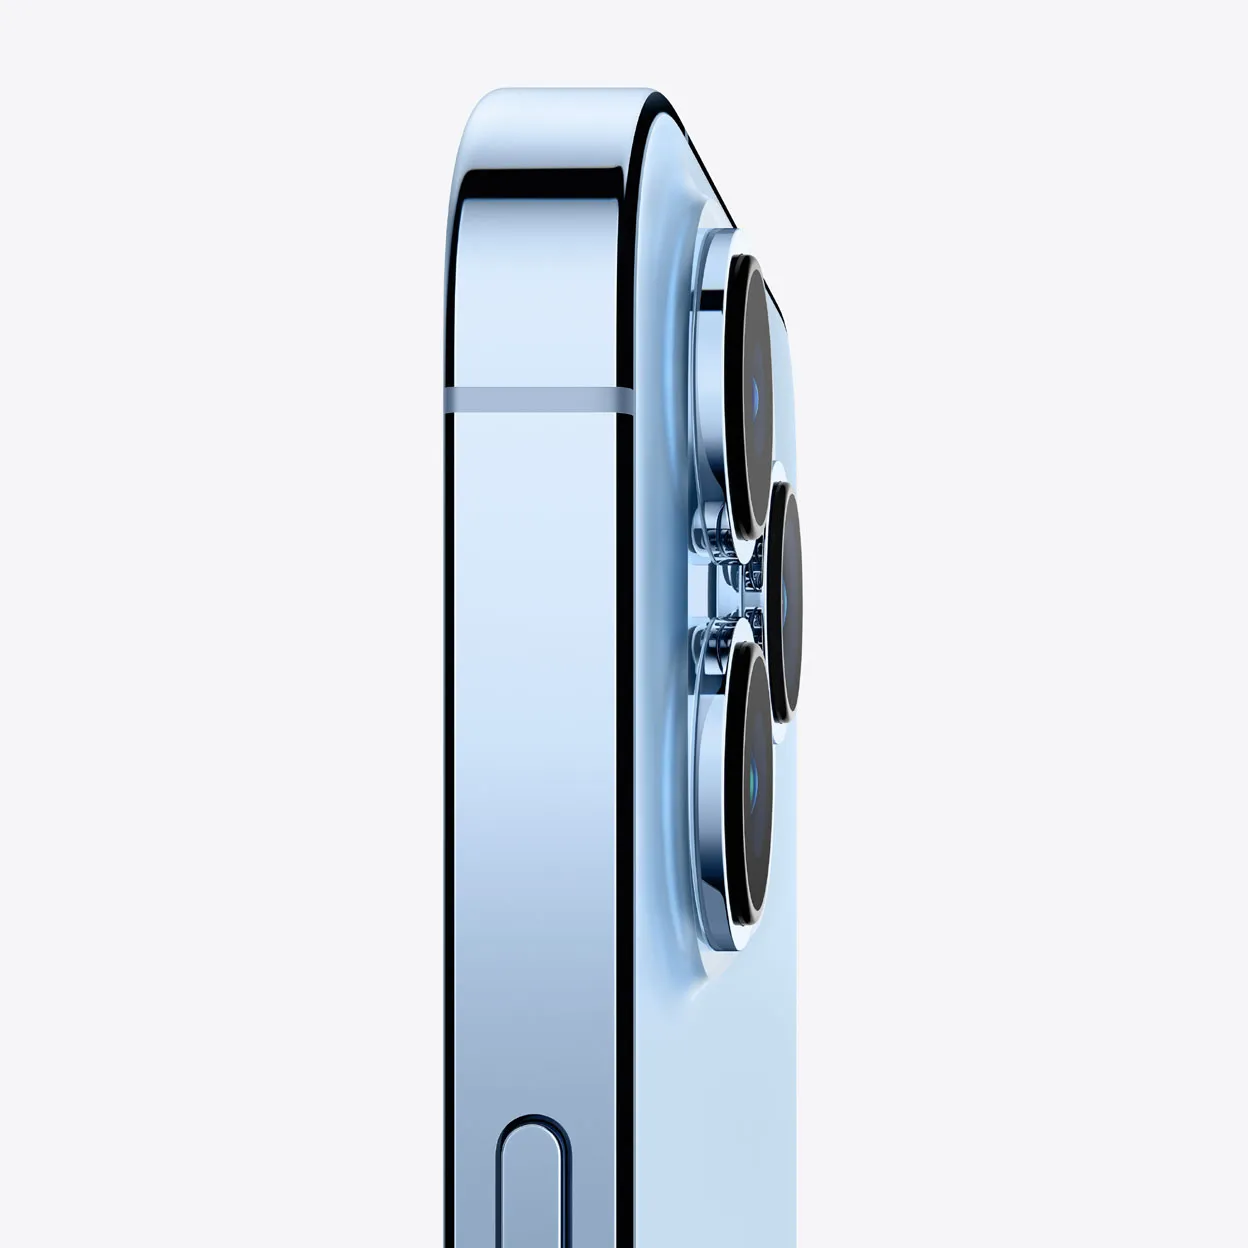 Apple iPhone 13 Pro (128GB) – Sierra Blue